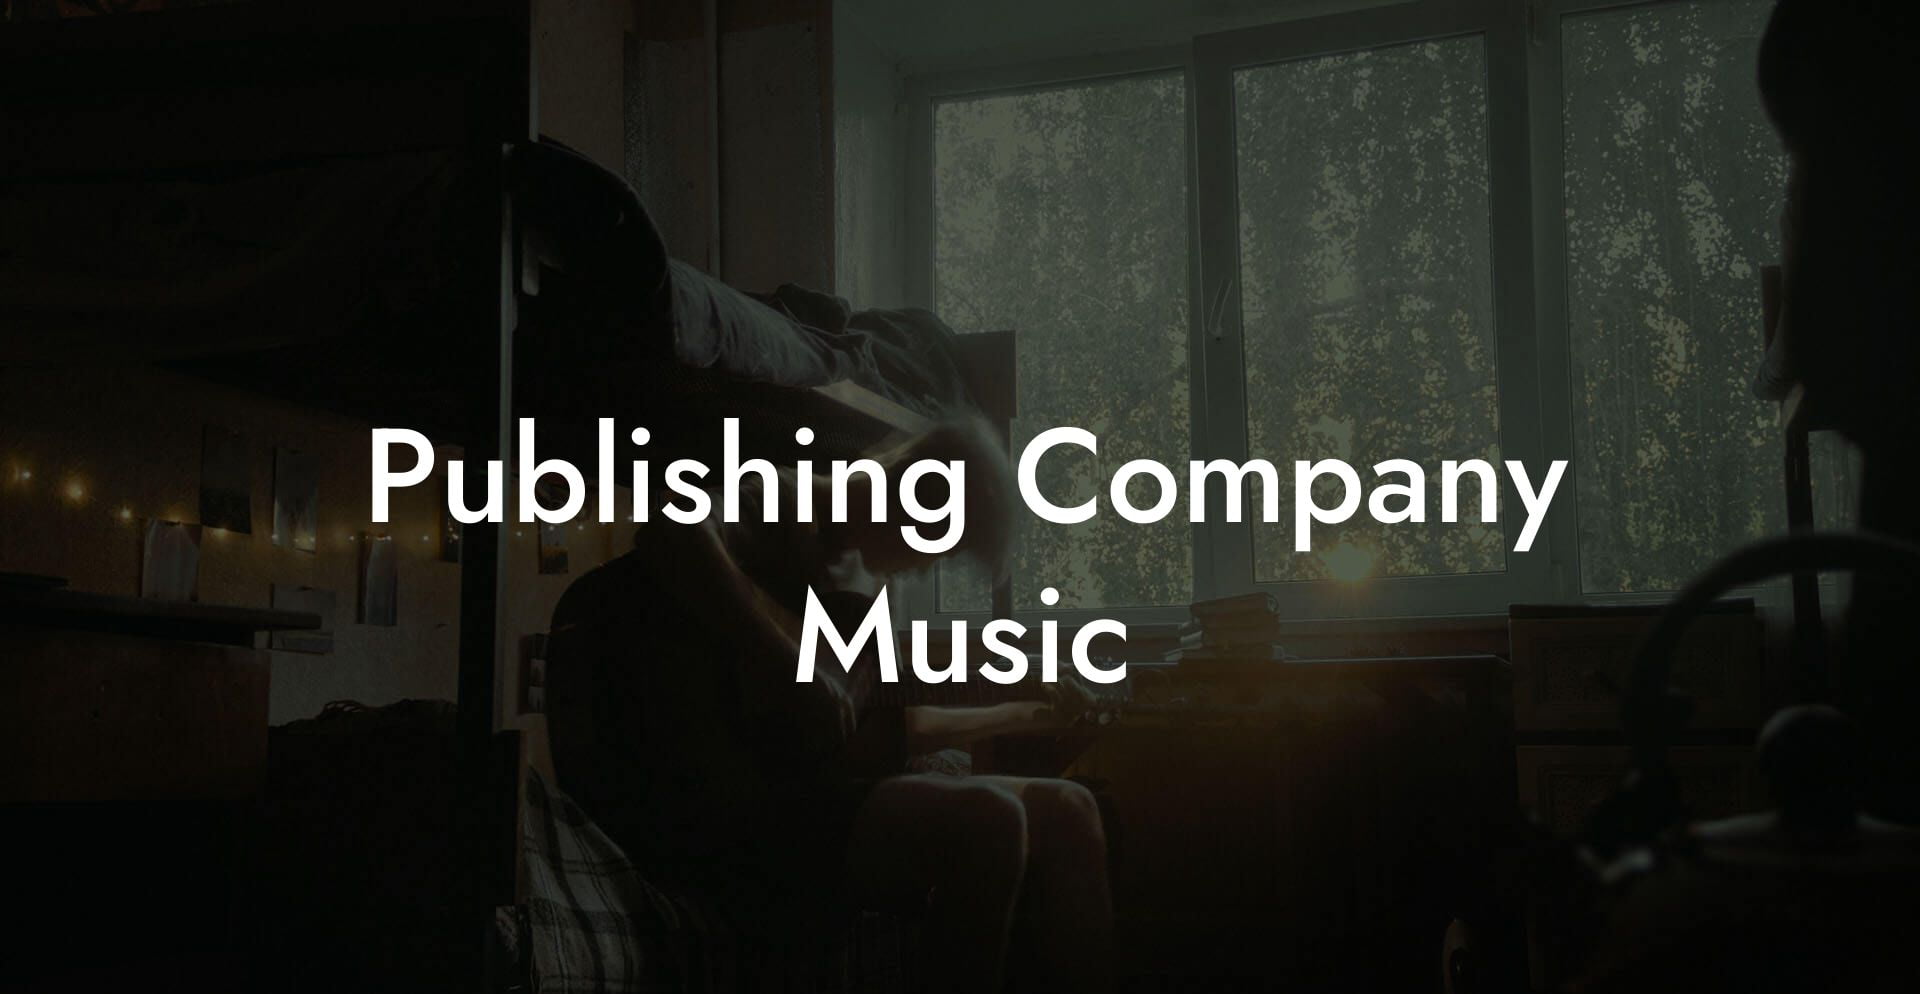 Publishing Company Music